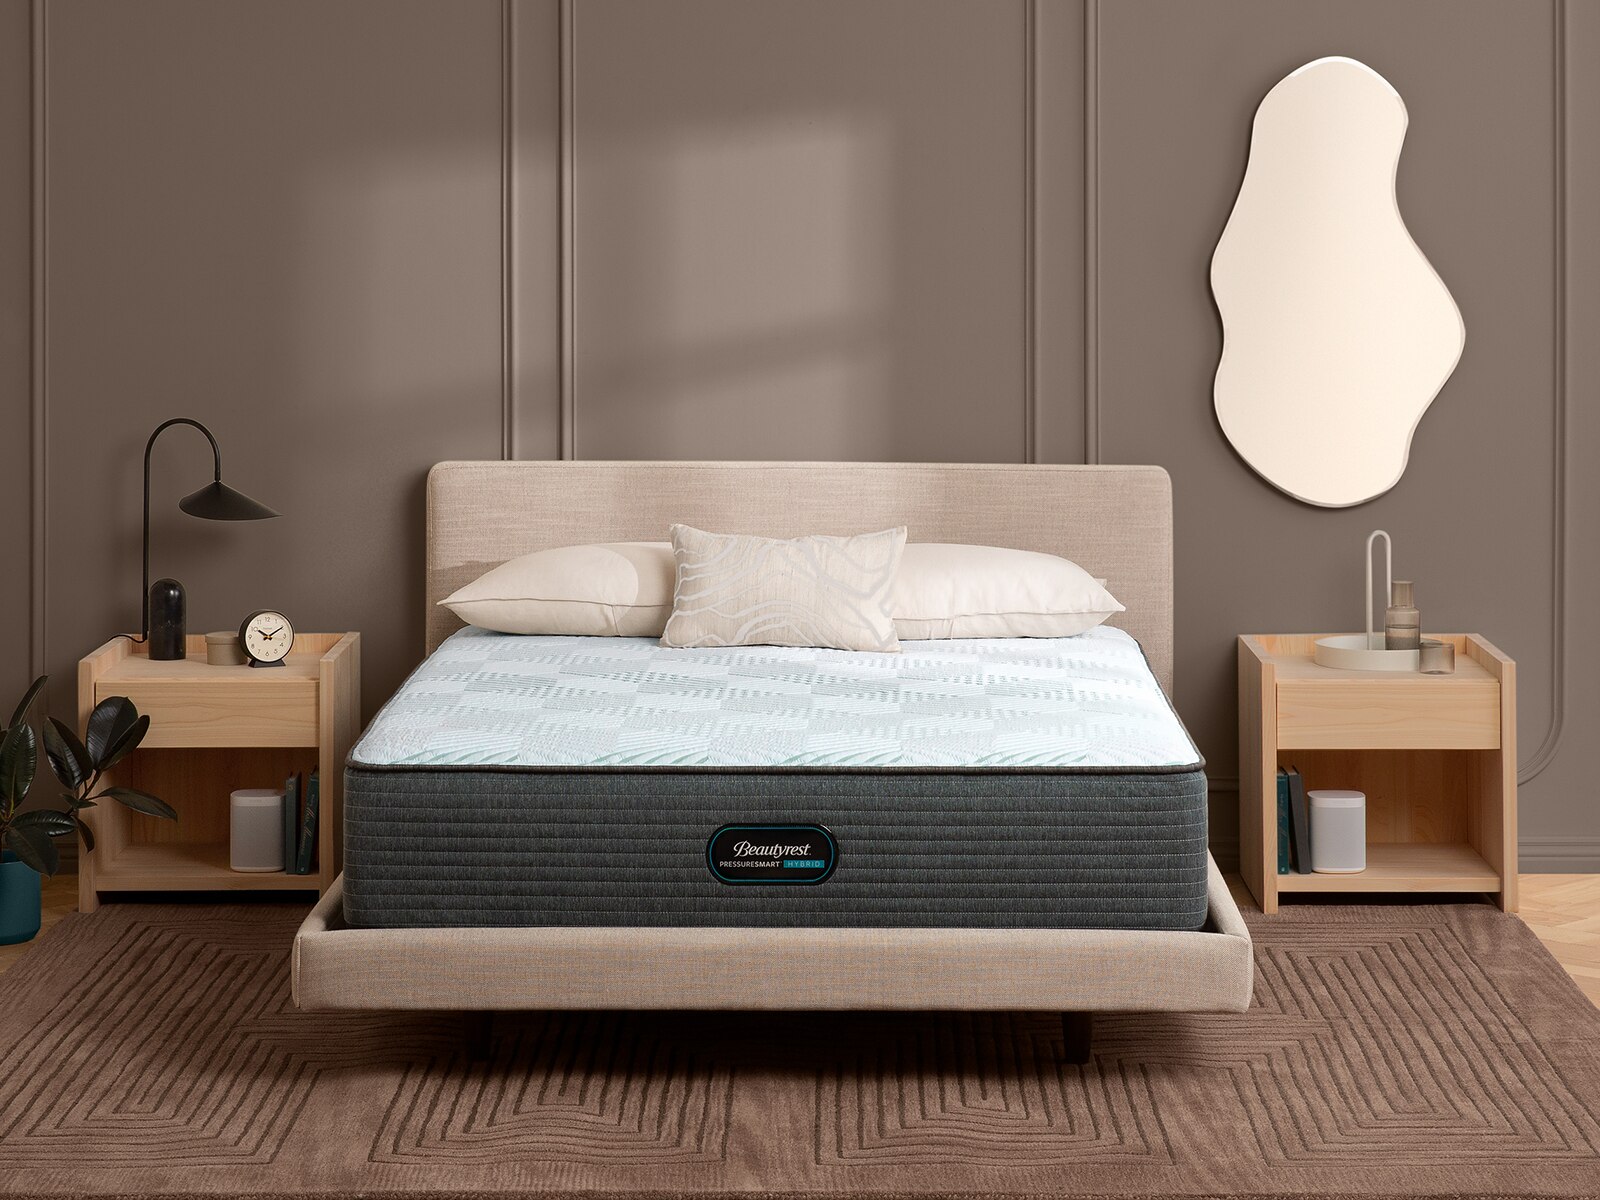 beautyrest pressuresmart 11.5 inch firm mattress stores